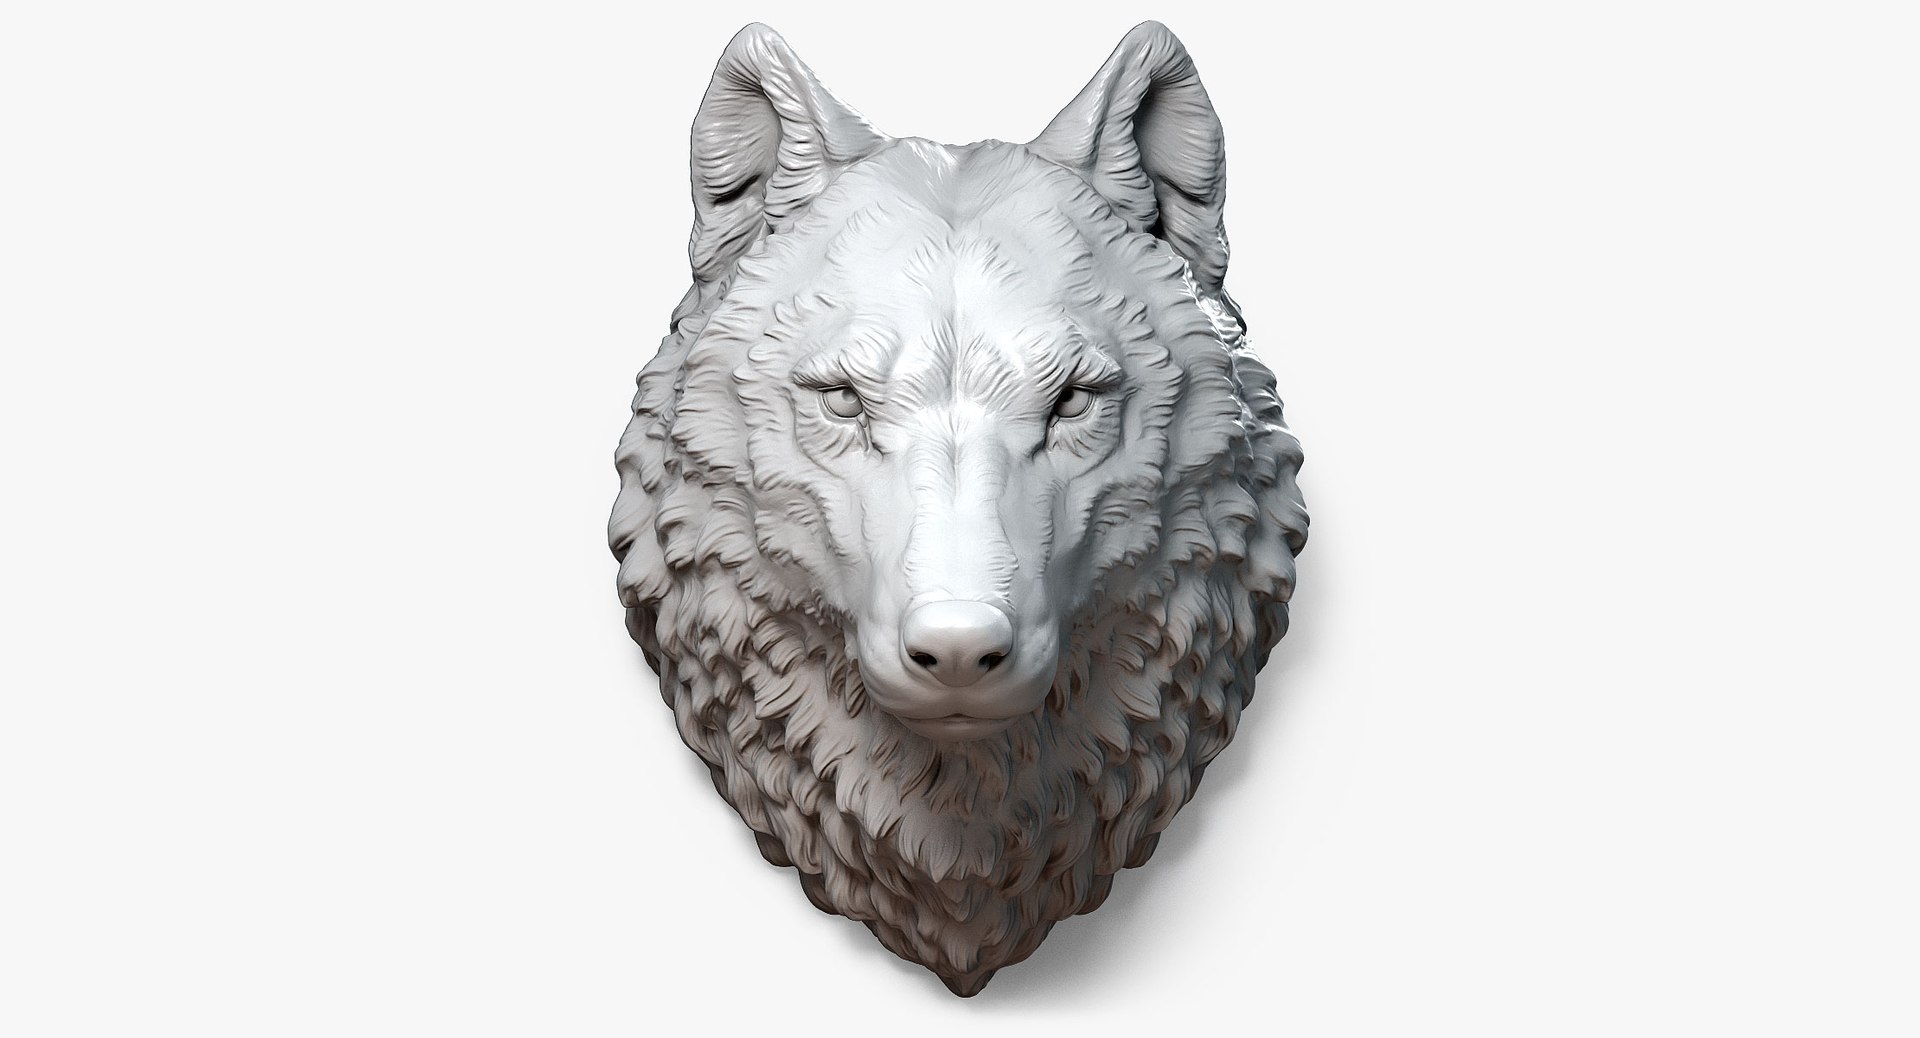 max wolf head sculpture